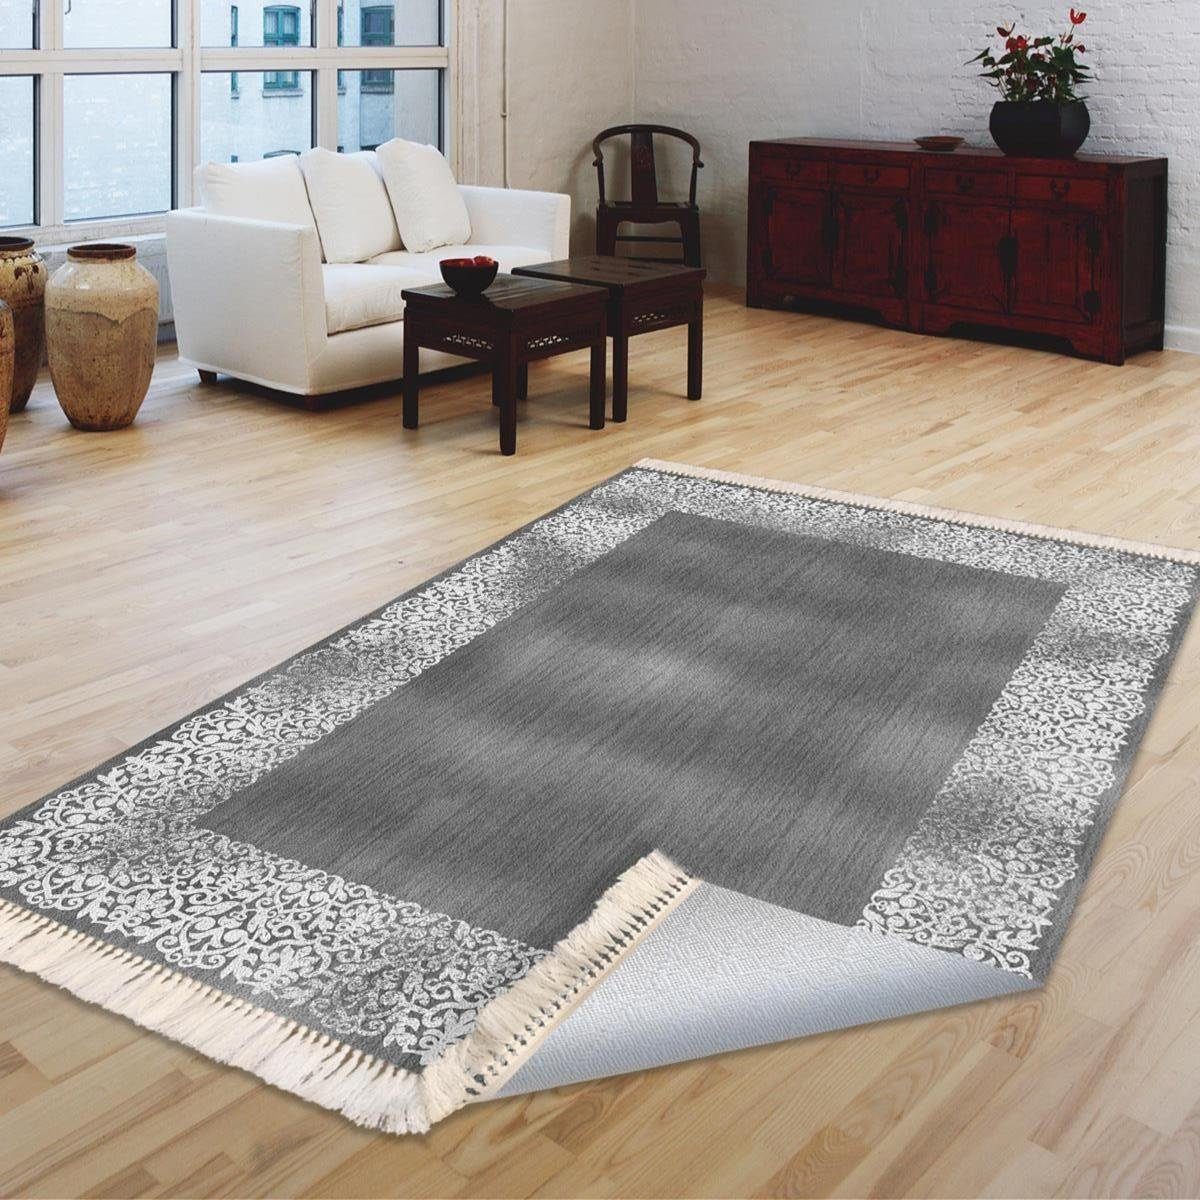 Teppich Klassisch Flachteppich Textilien, Universell mm, 6x in Waschmaschinengeeignet Fußbodenheizungsgeeignet Läufer Grau Höhe: einsetzbar, 6 Größen, Jungengel